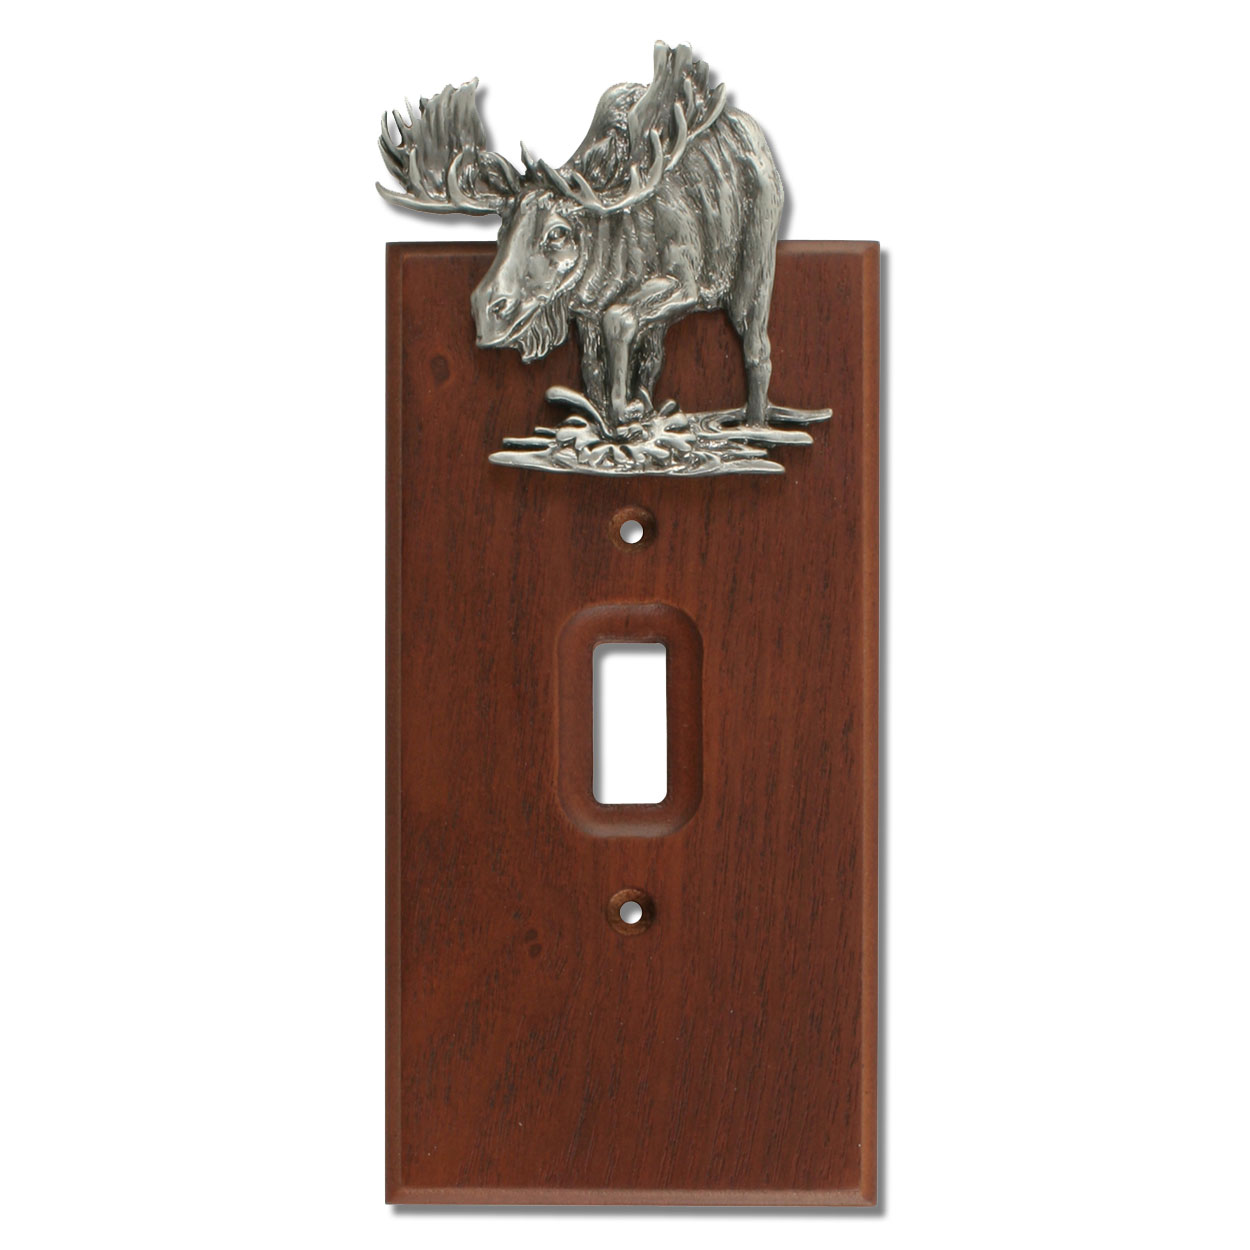 531412 - Lazart Moose Pewter on Wood Single Standard Switch Plate